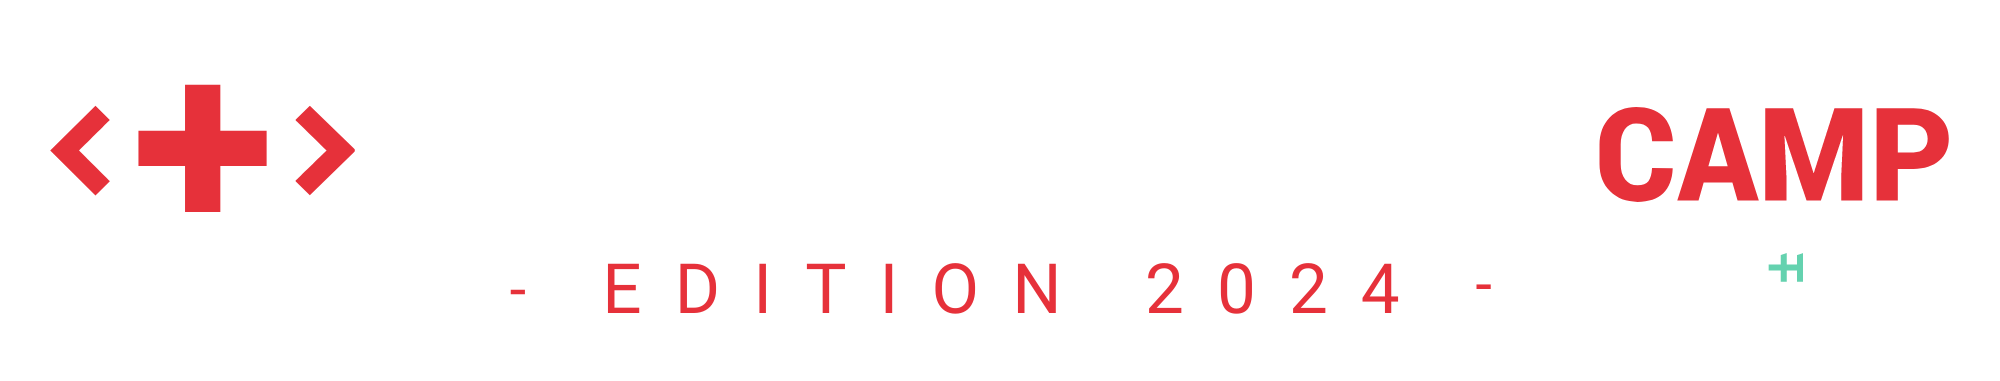 hhc-2024-logo-rouge-lettrage-blanc-byHF